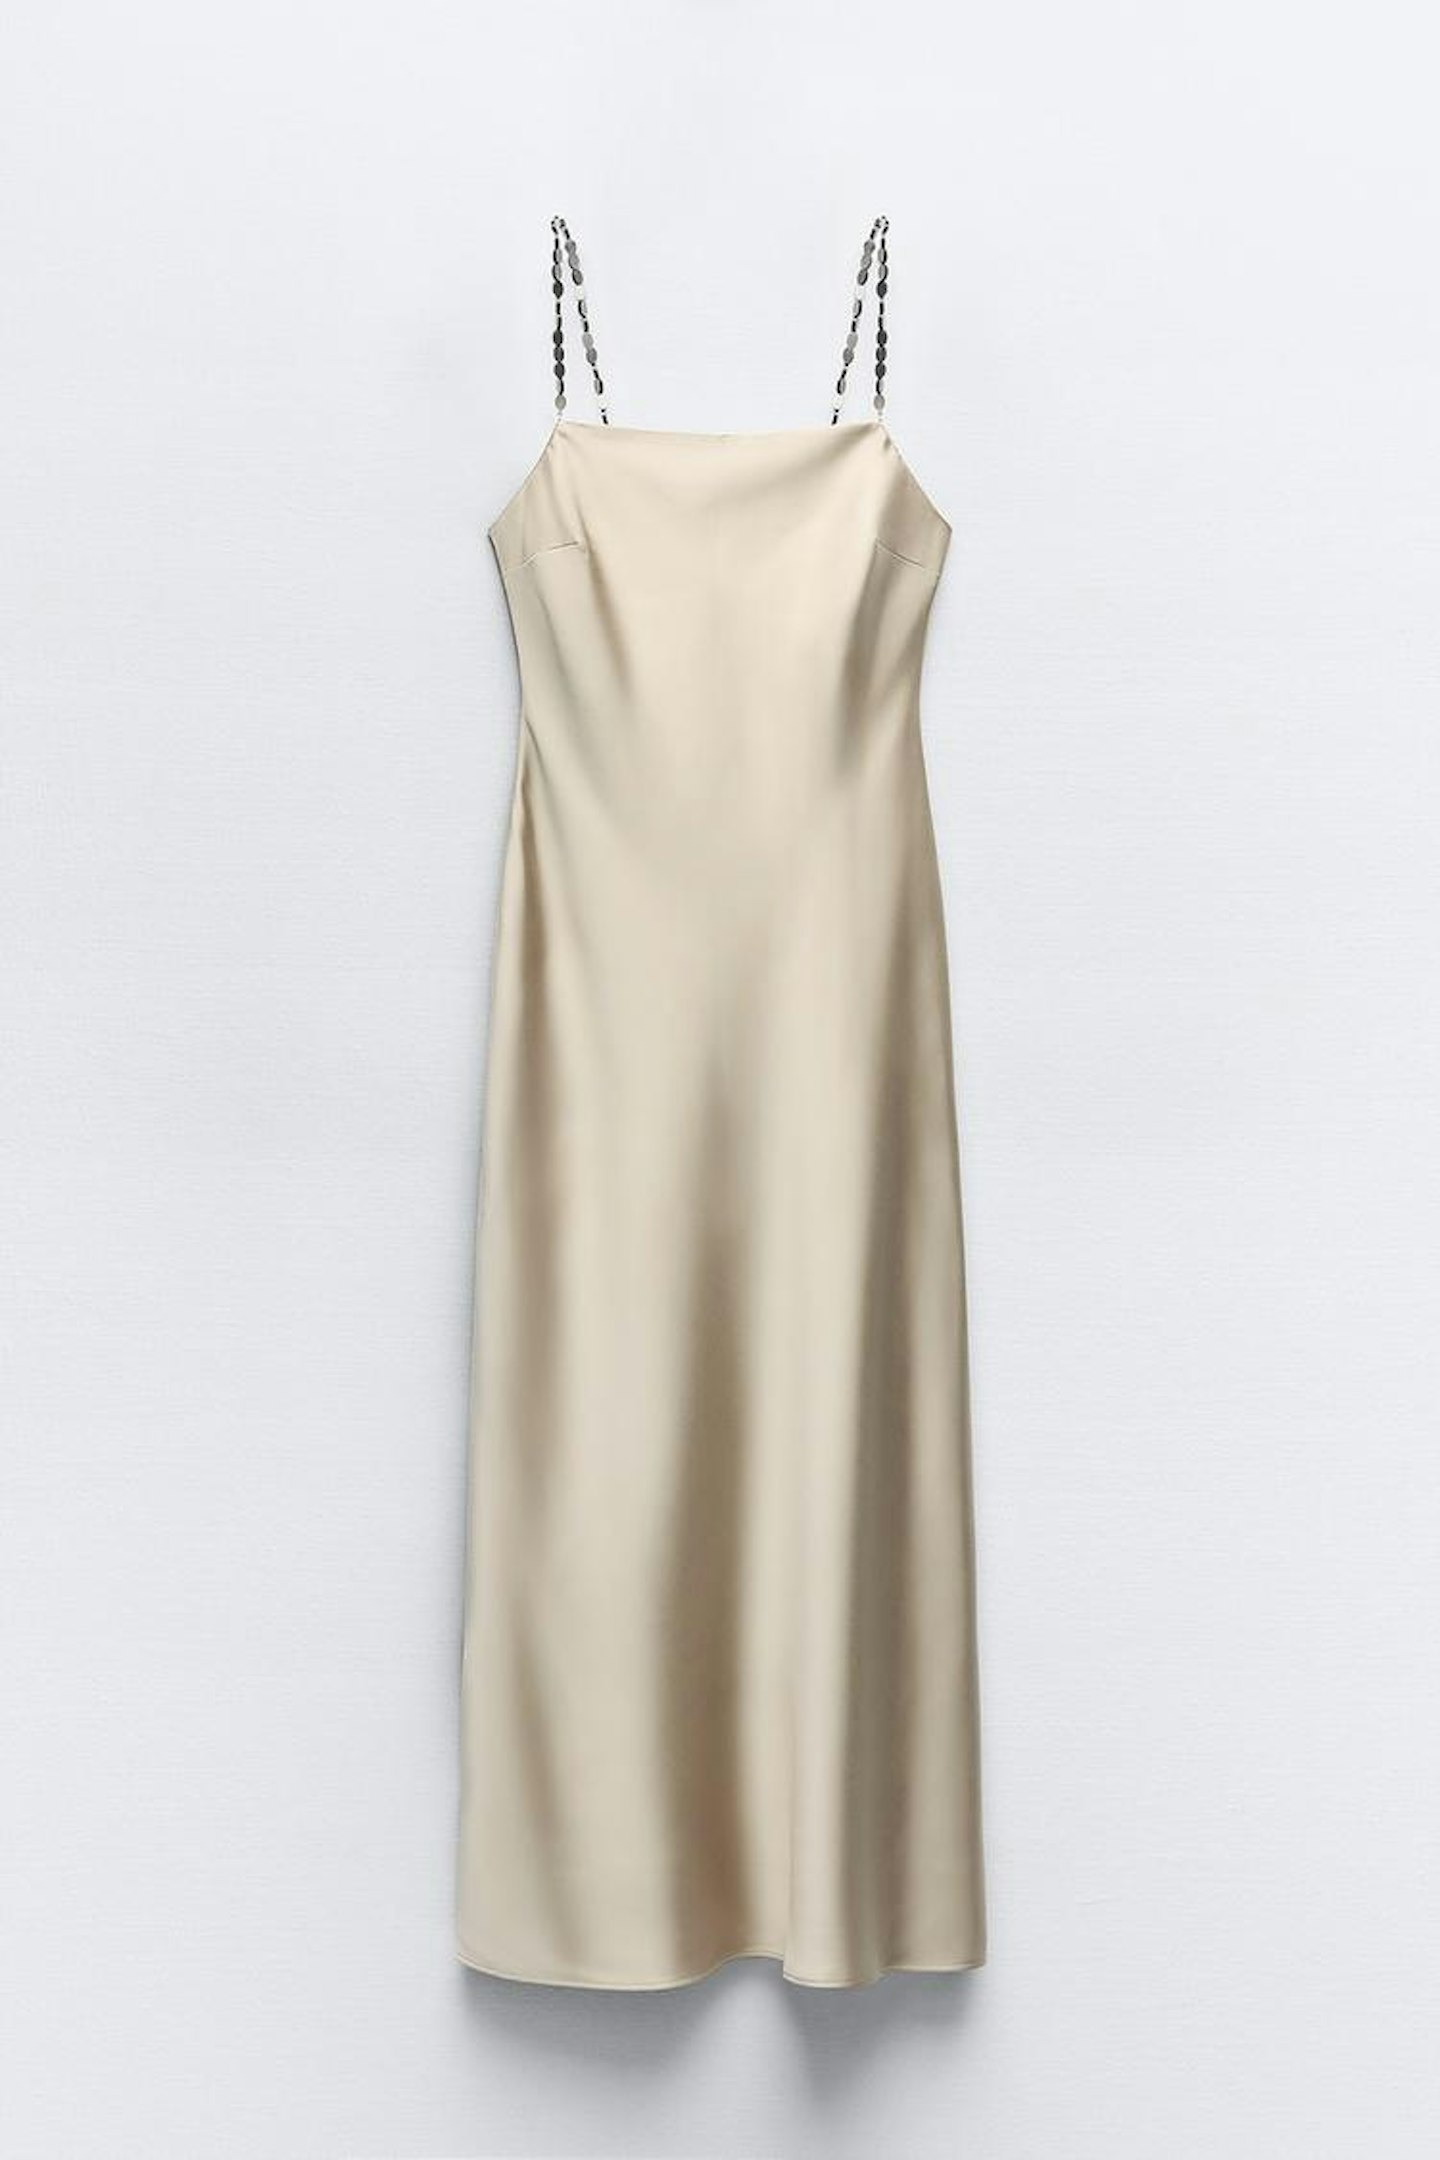 Zara, Beaded Midi Dress